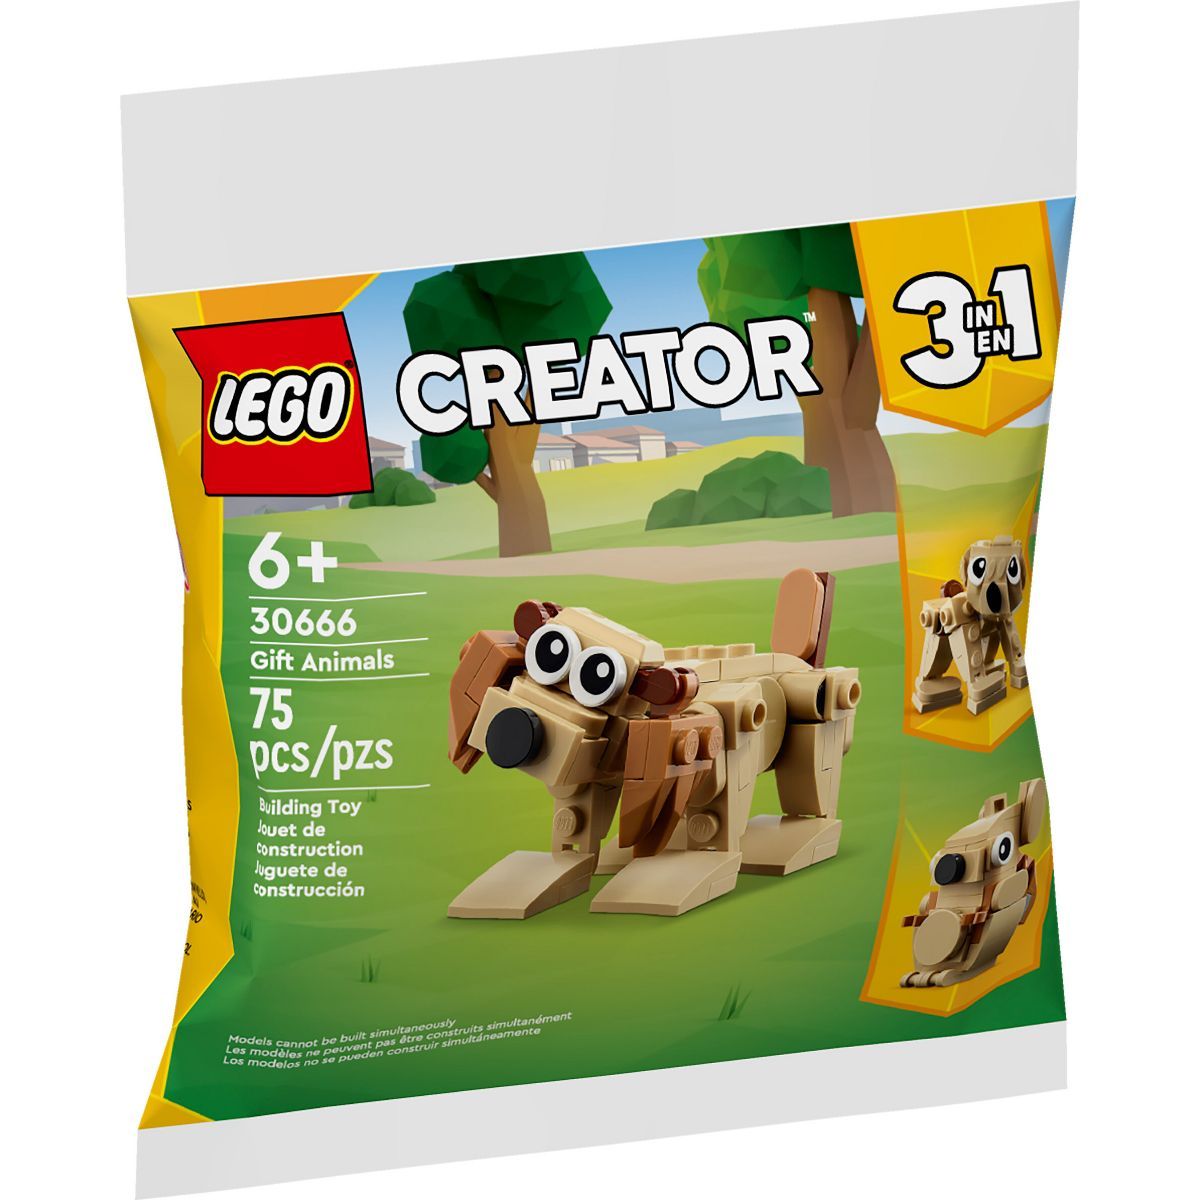 LEGO Creator Gift Animals 30666 | Target